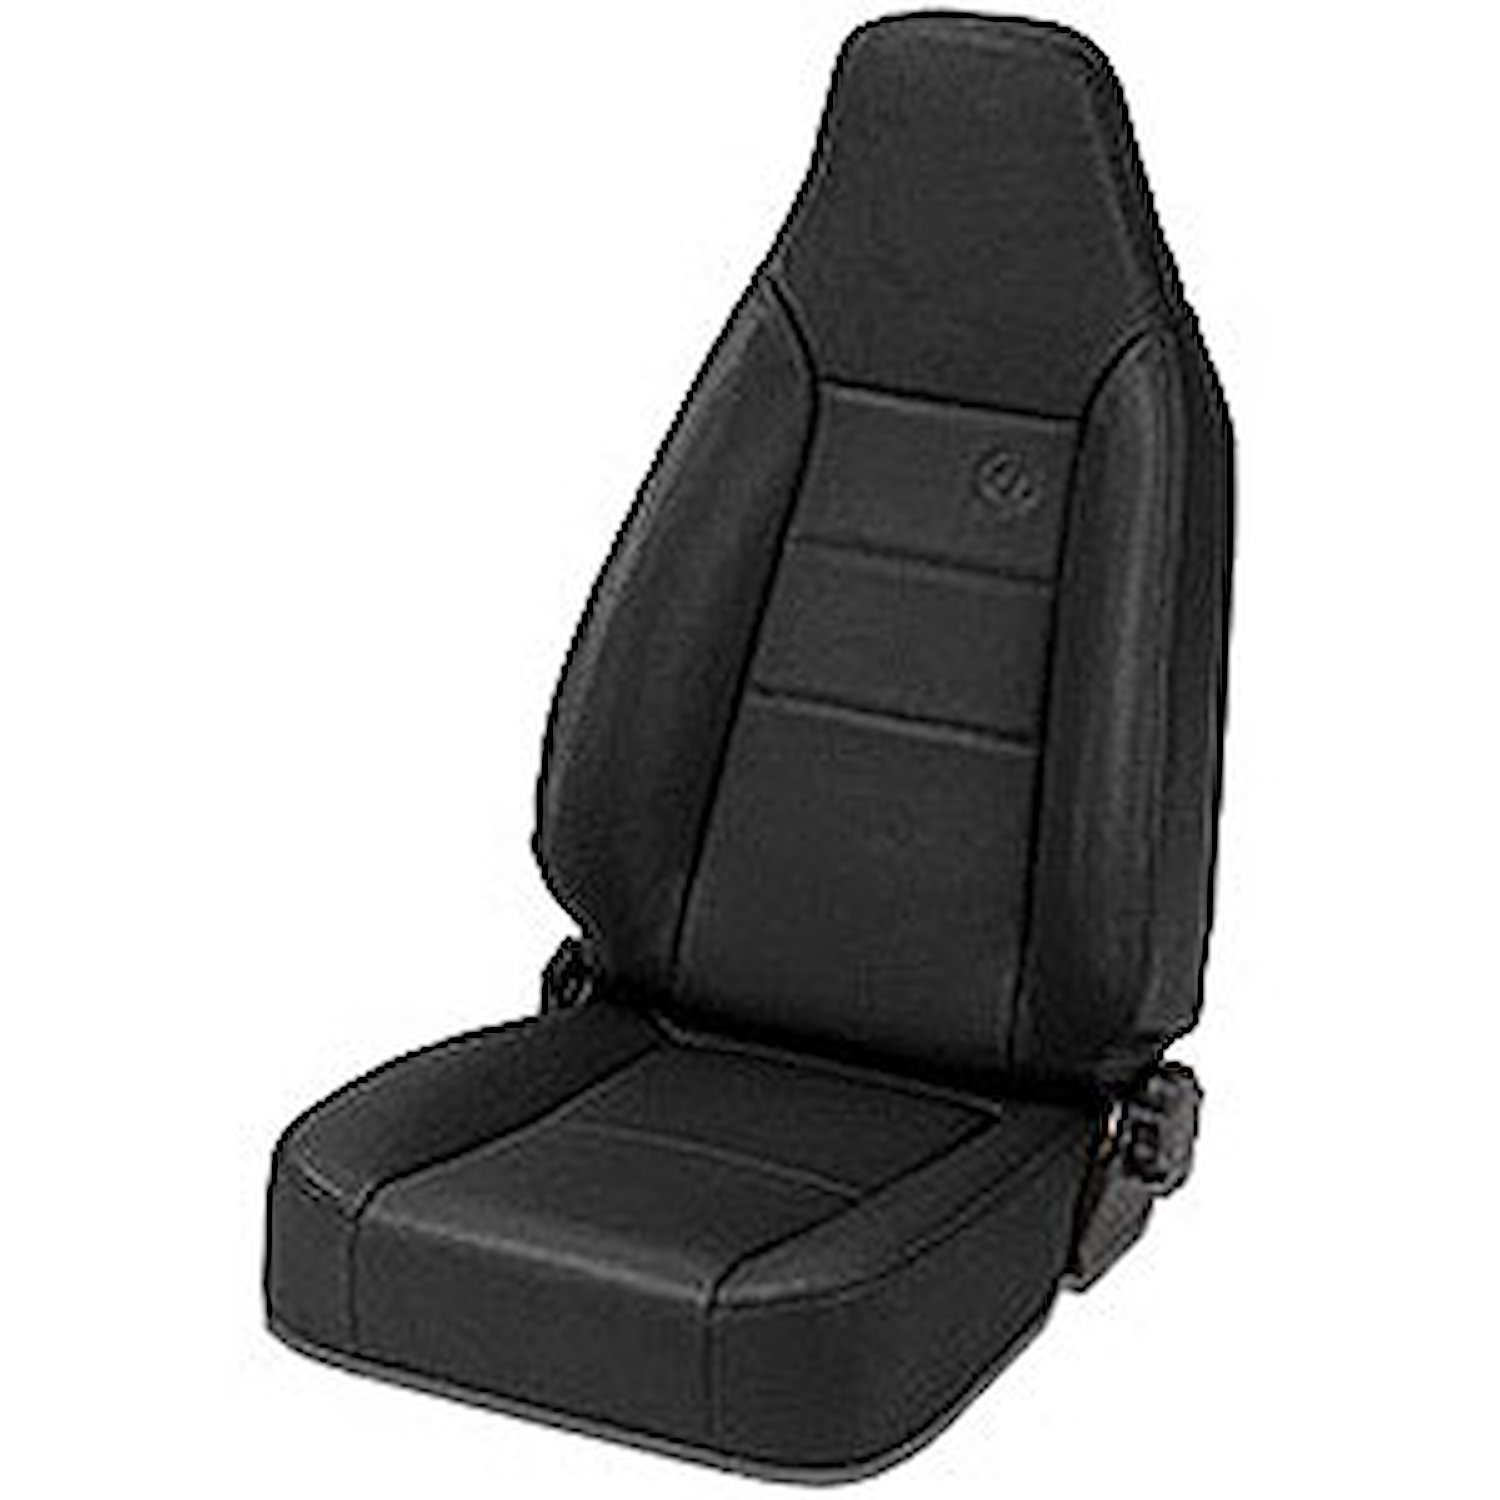 Trailmax II Sport Seat, Black Denim, Front, High-Back, Vinyl, Bucket, Driver Or Passenger Side